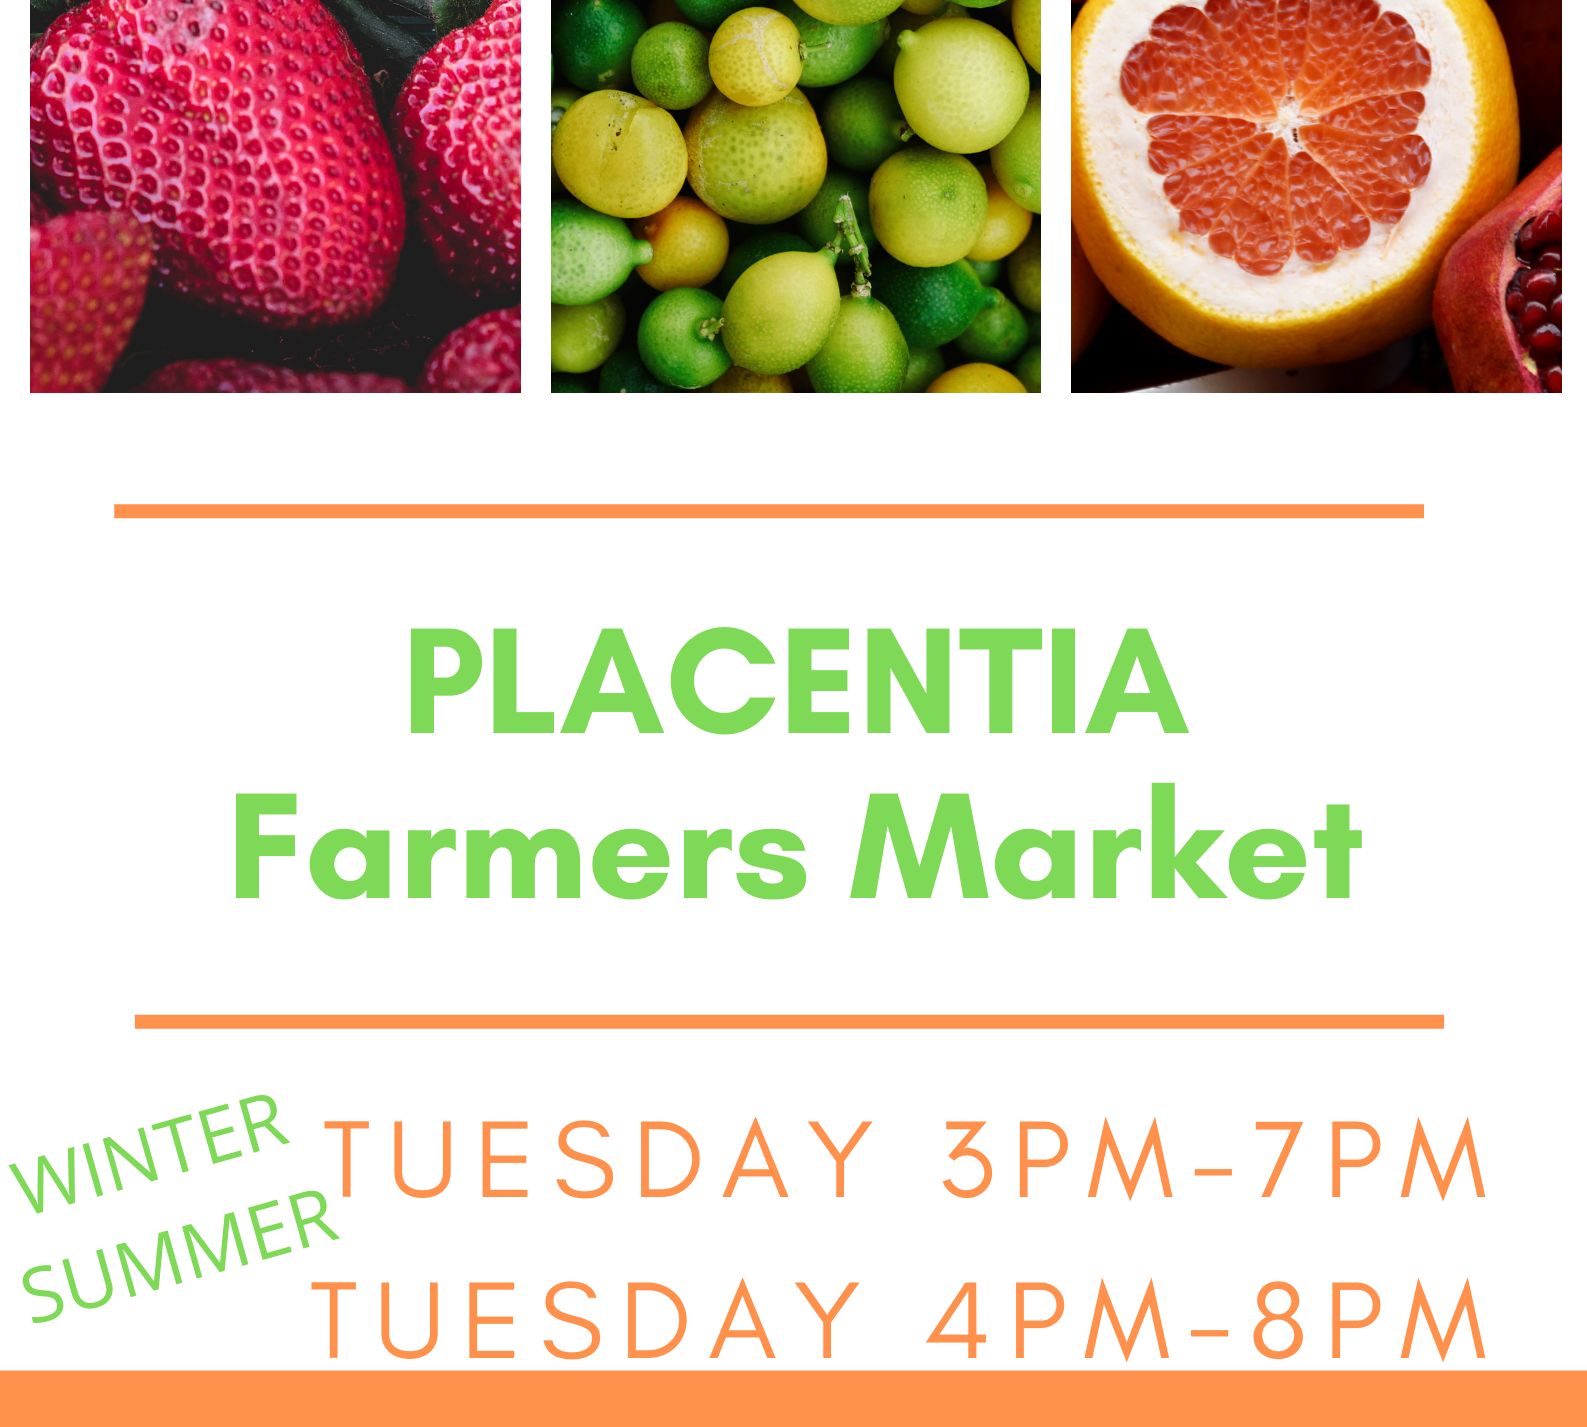 Placentia Farmers Market